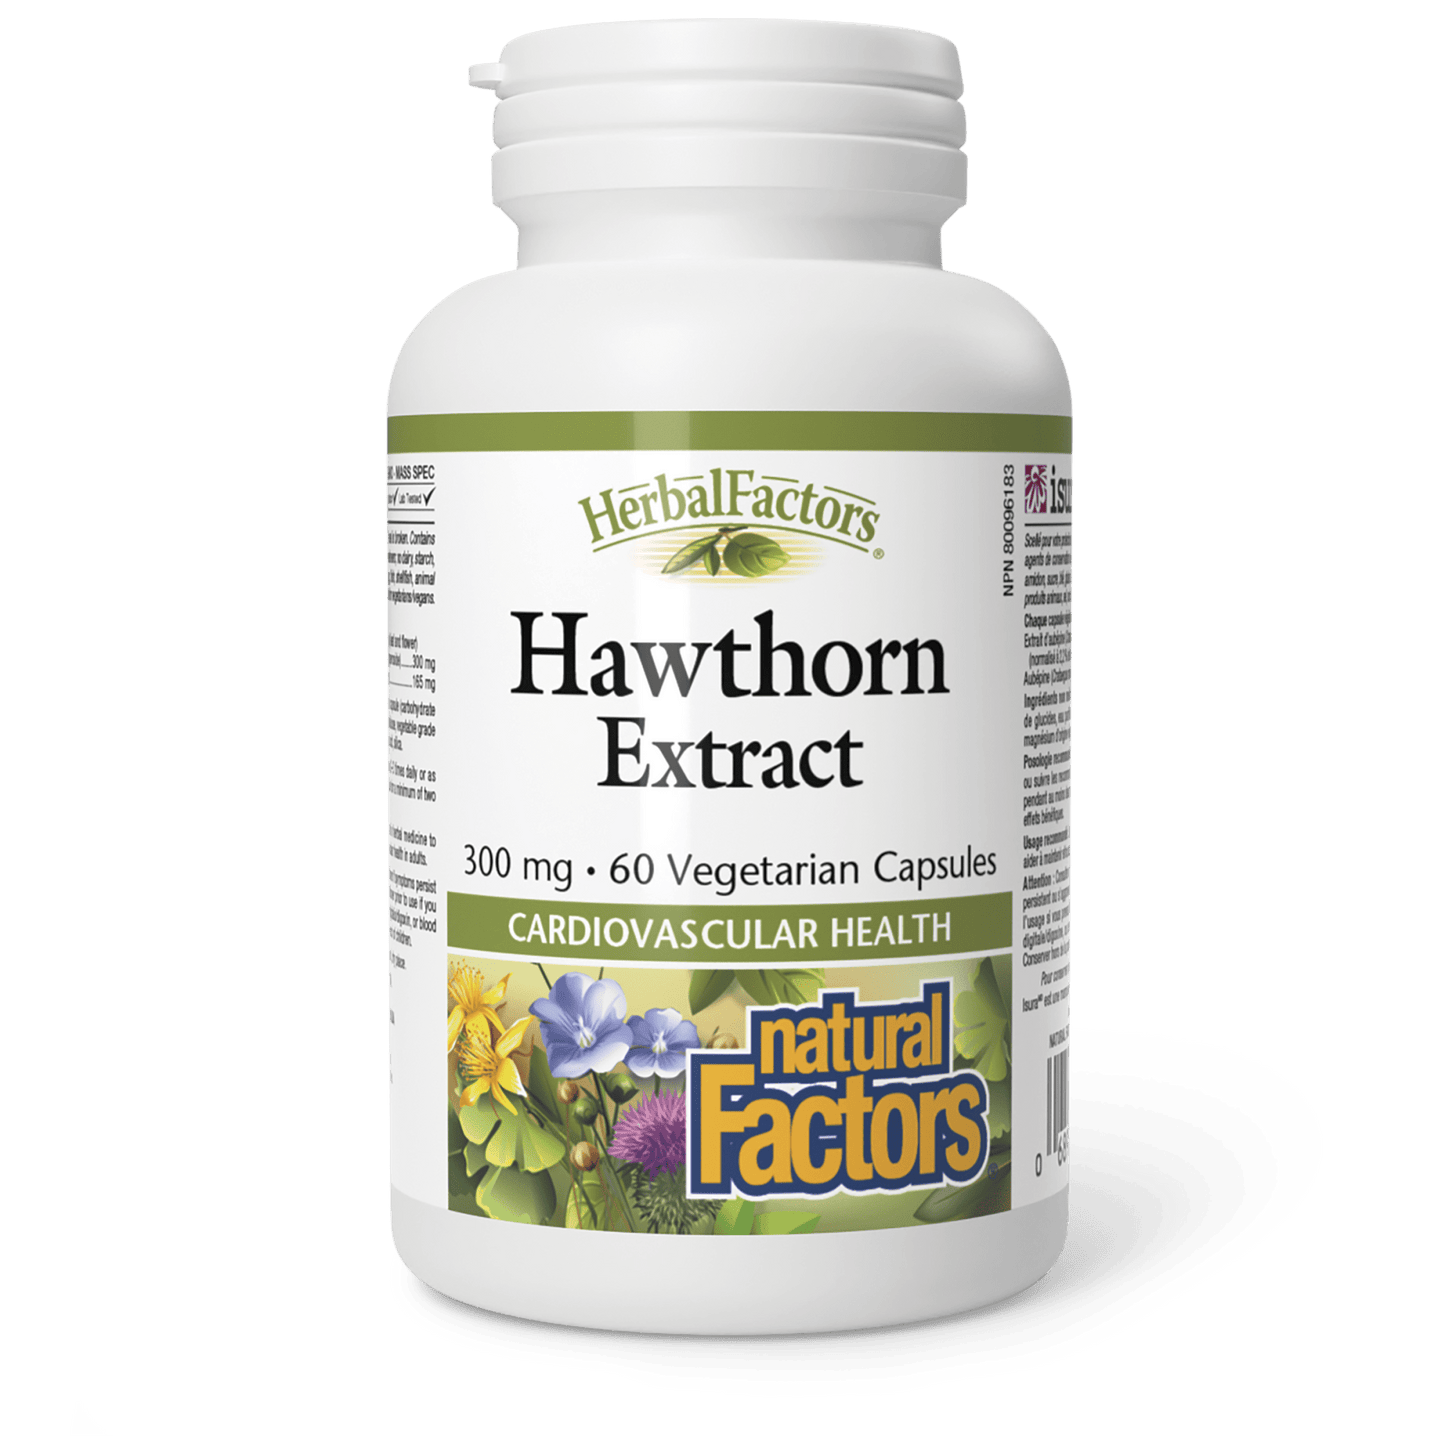 Hawthorn Extract 300 mg, HerbalFactors, Natural Factors|v|image|4815